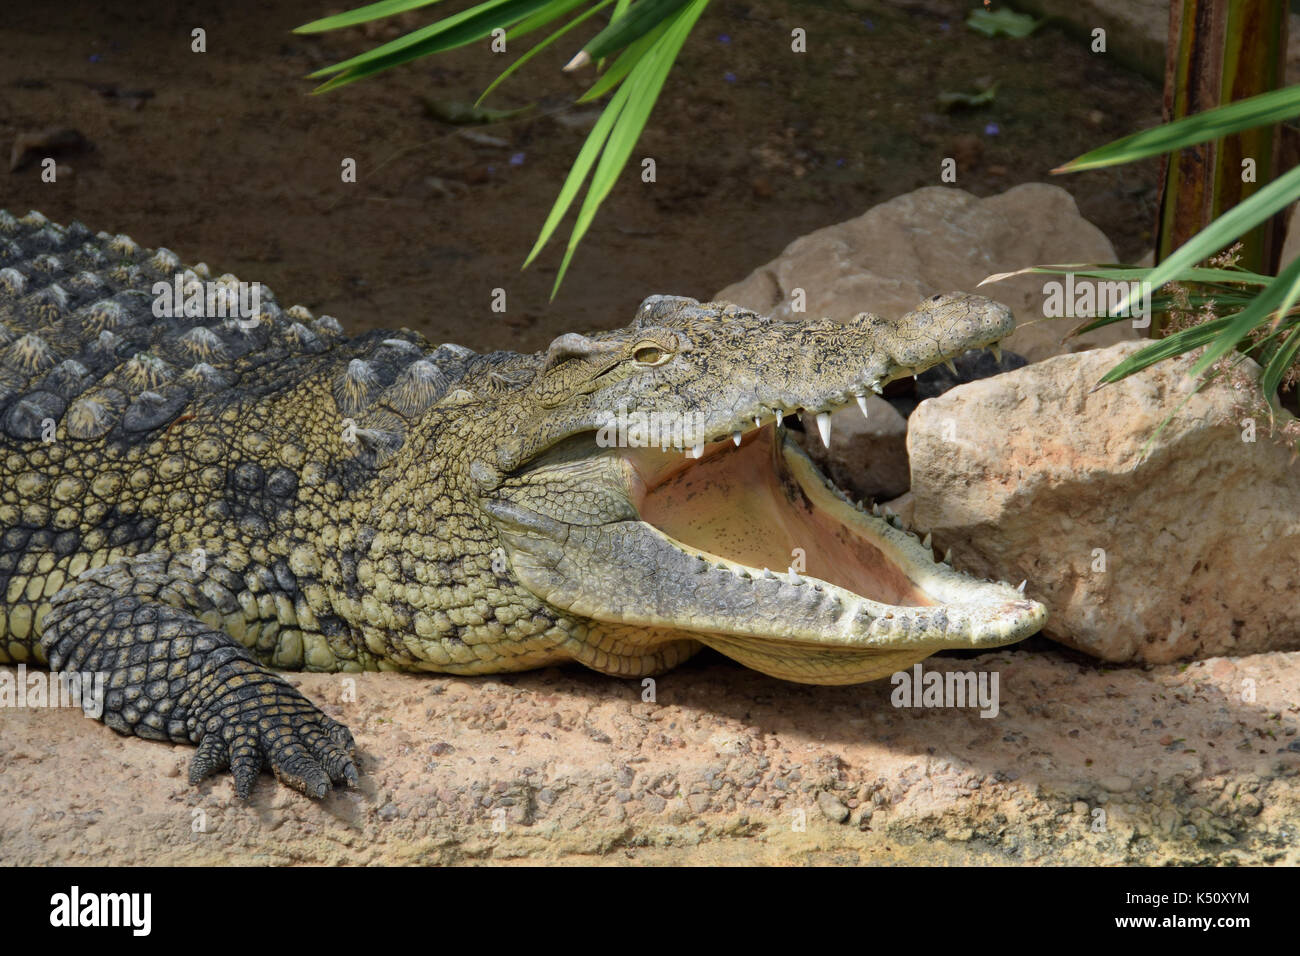 Nile crocodile with open jaws. Wild reptile animal. Stock Photo